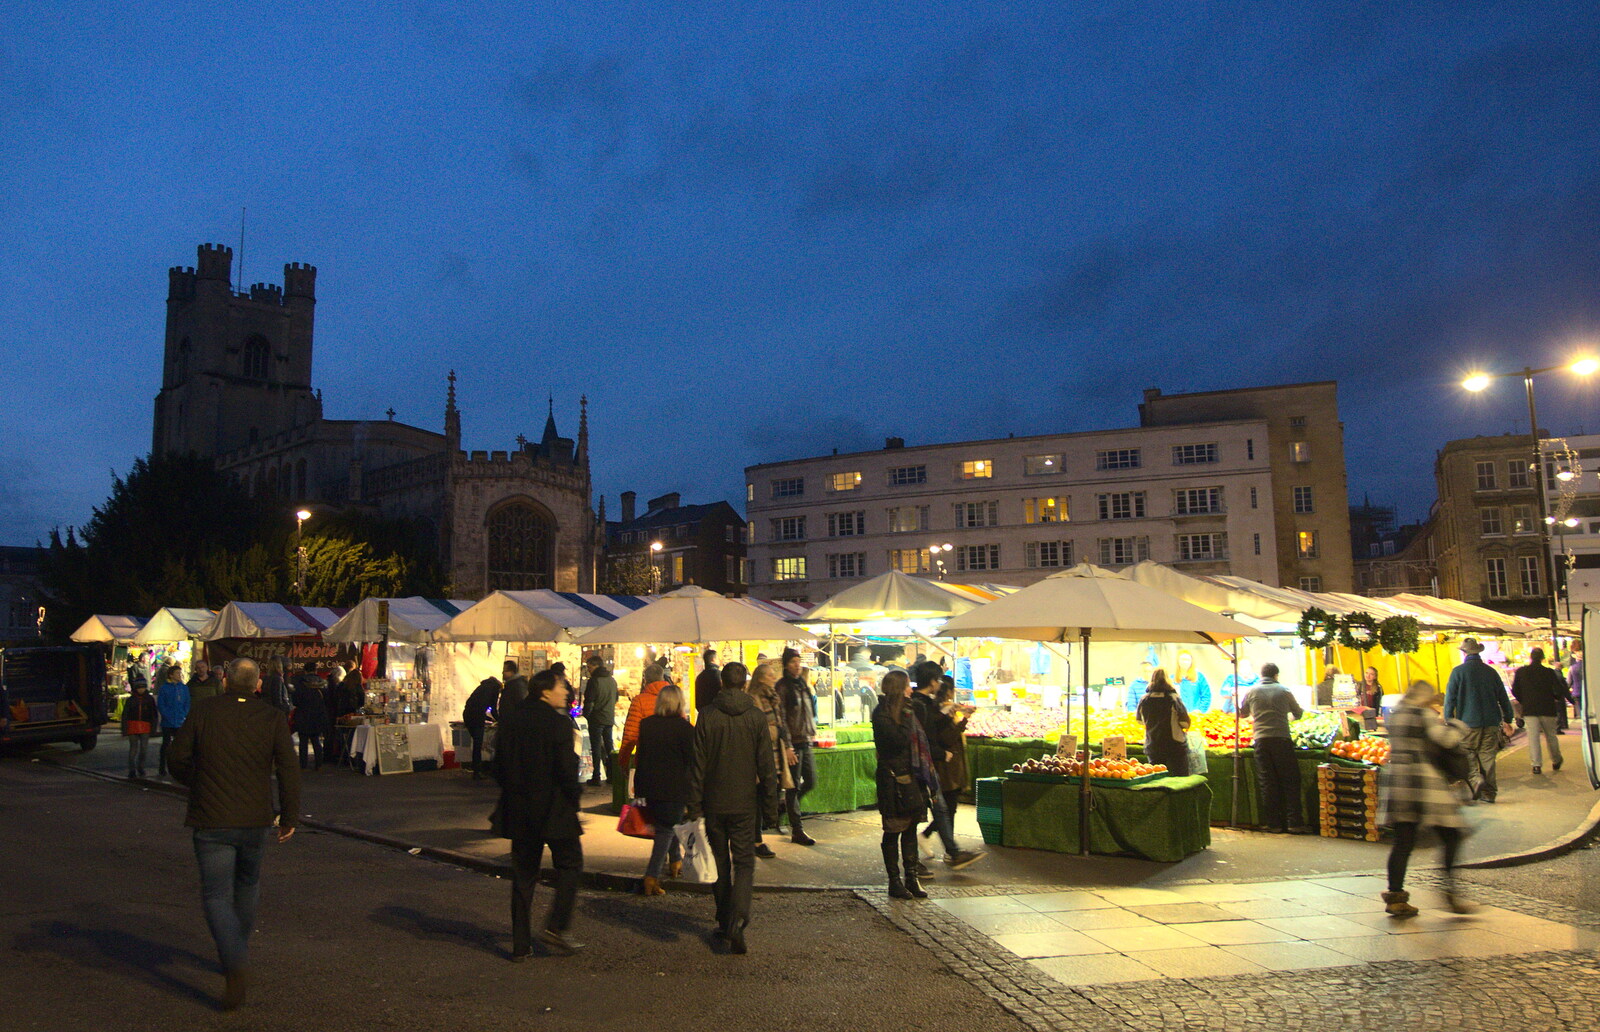 Cambridge Market from Fondue with the Swiss Massive, Gwydir Street, Cambridge - 19th November 2016